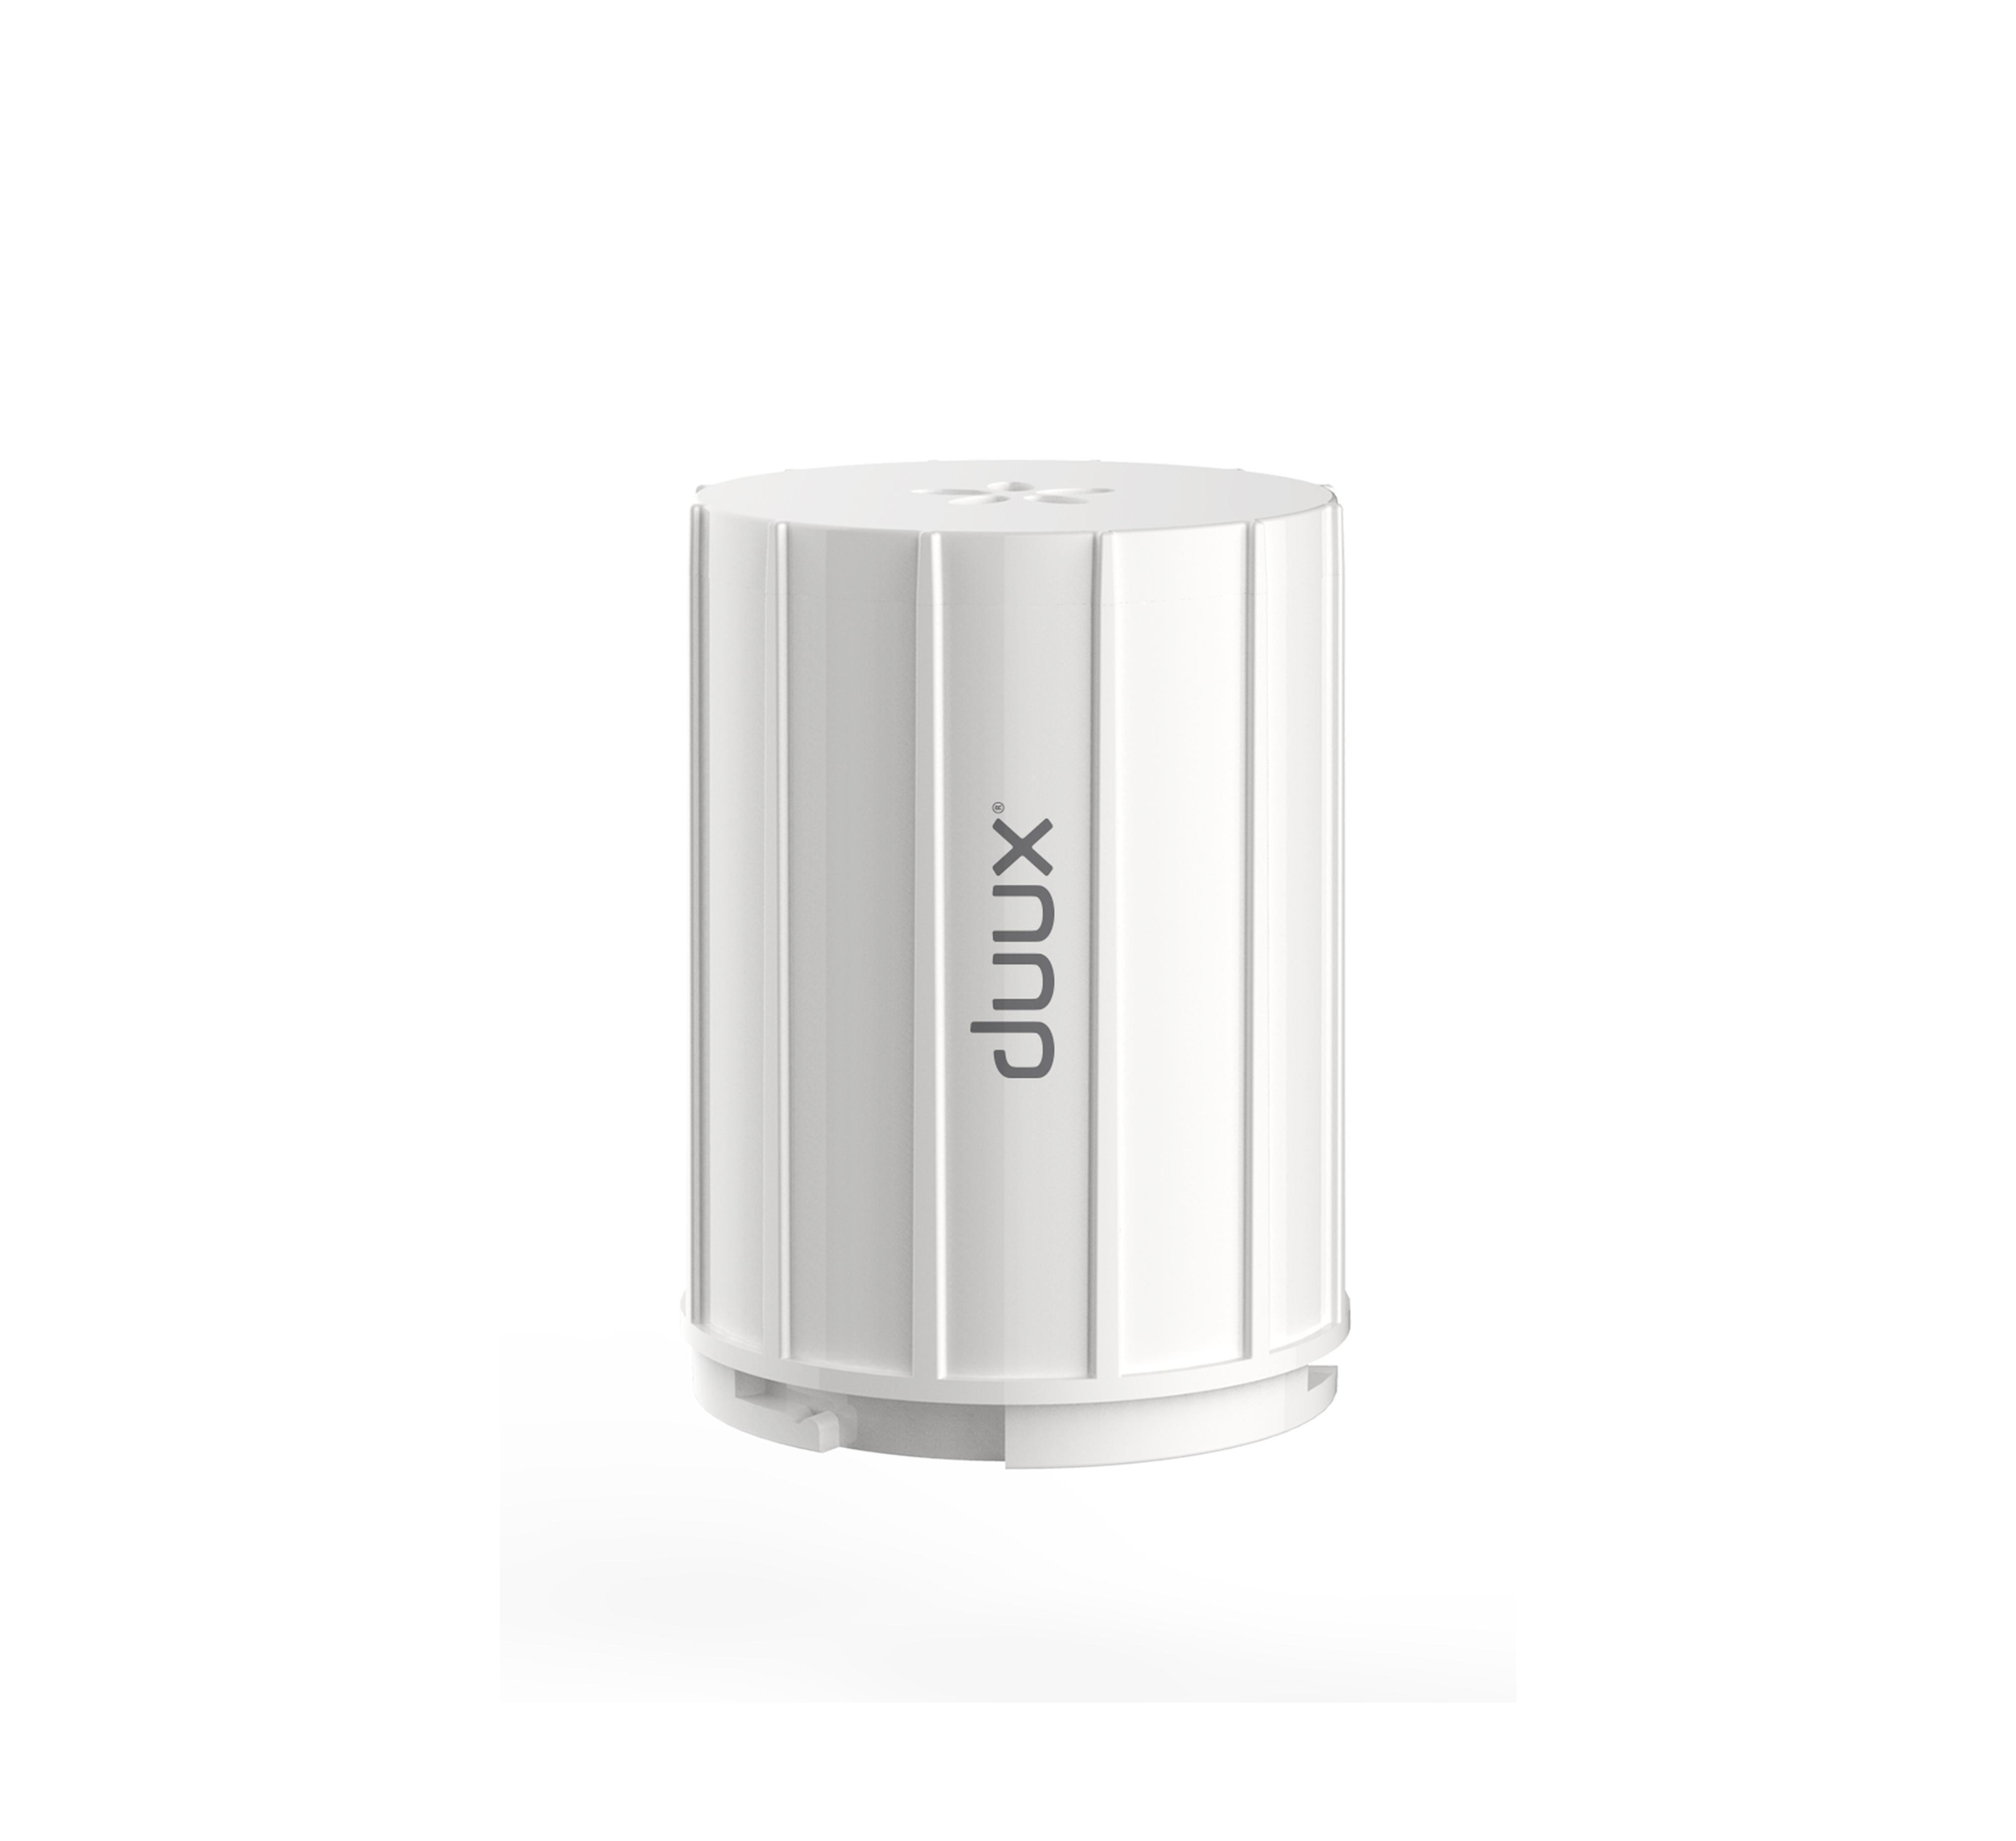 DUUX DXHU03 Tag Ultrasonic (20 Luftbefeuchter m²) Weiß Watt, Raumgröße: 30